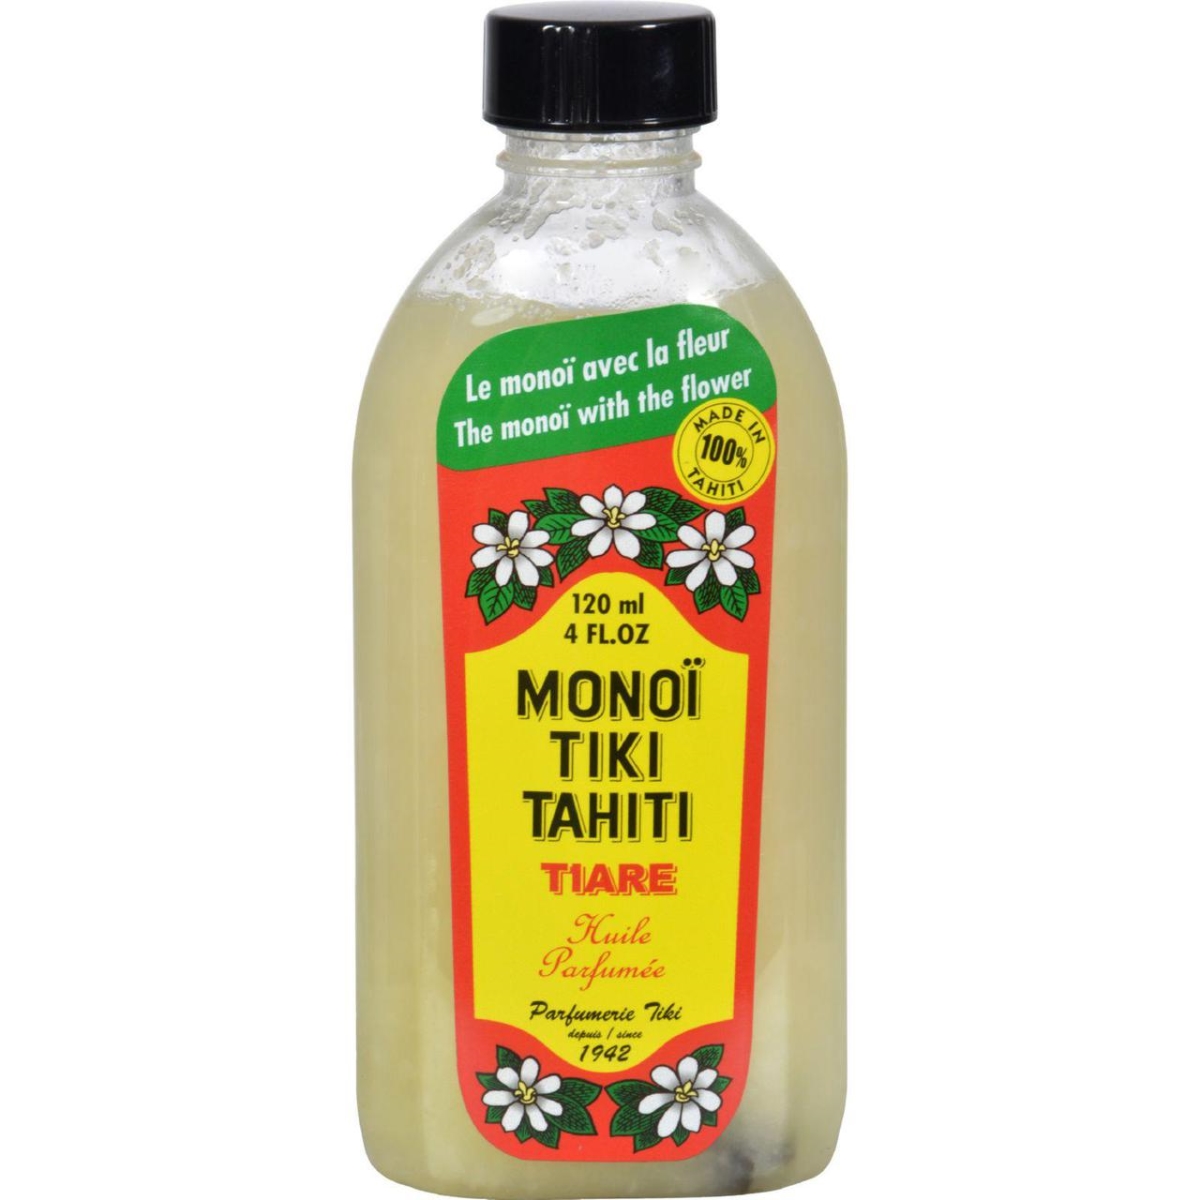 Hg0685172 4 Fl Oz Tiare Tahiti Tiiki Tahiti Coconut Oil